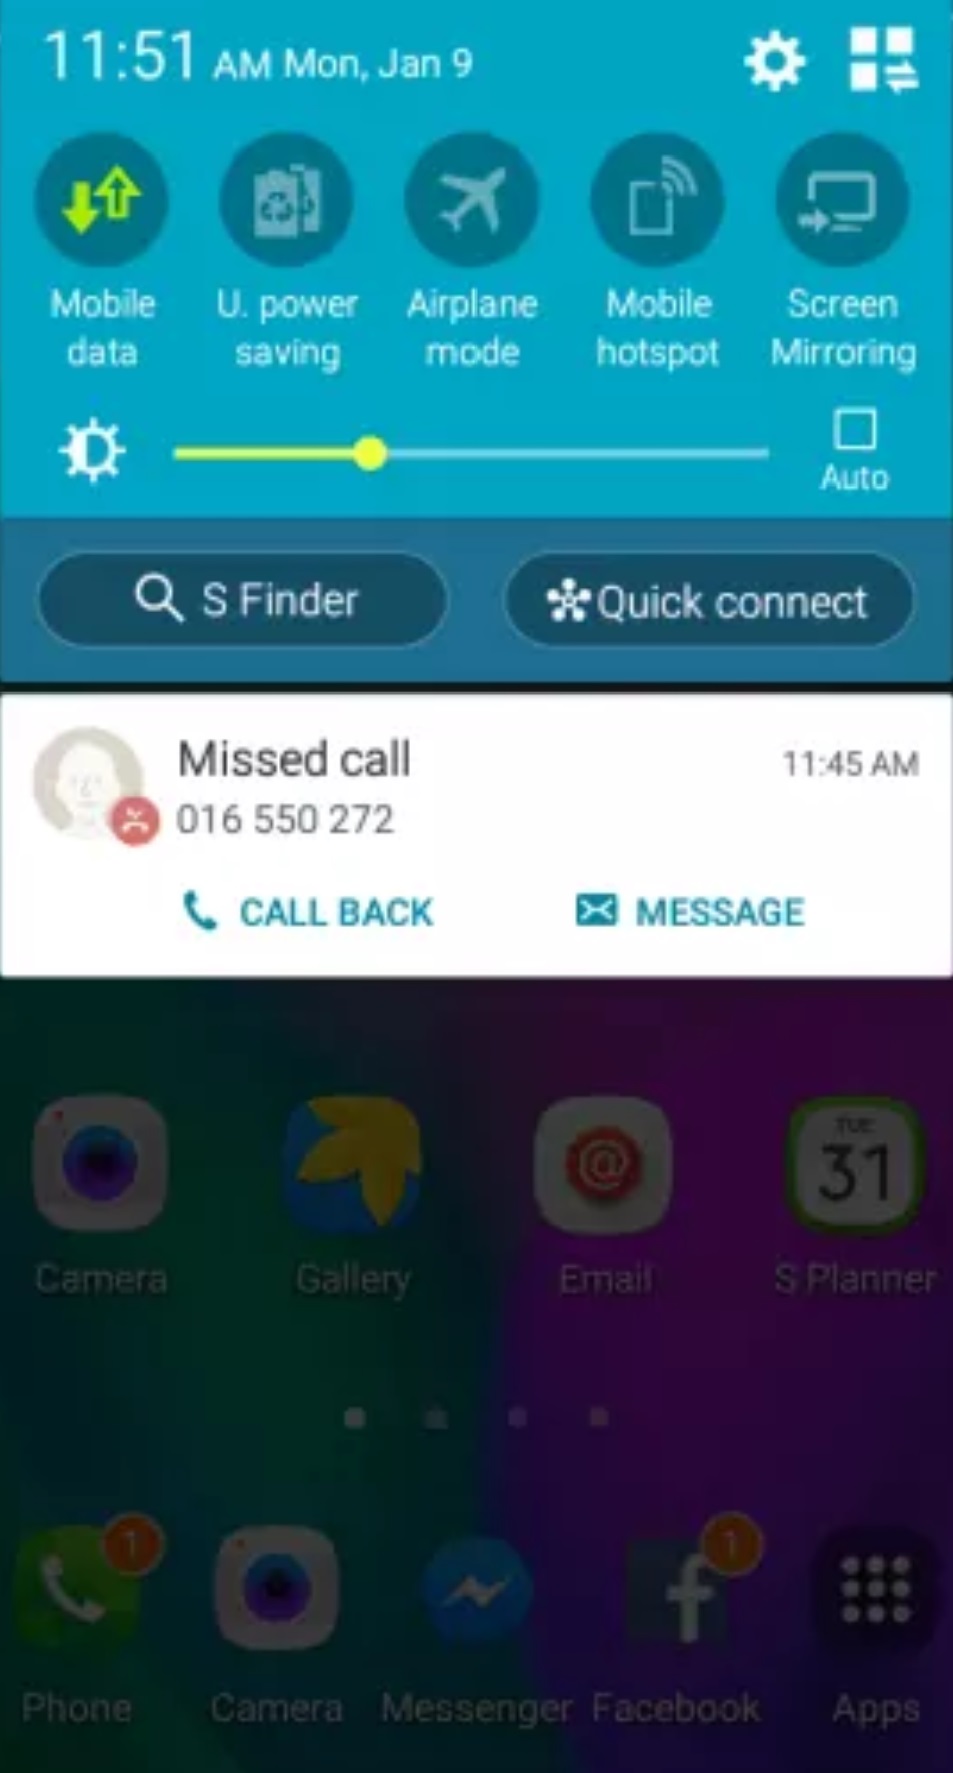 The sample missed call screenshot